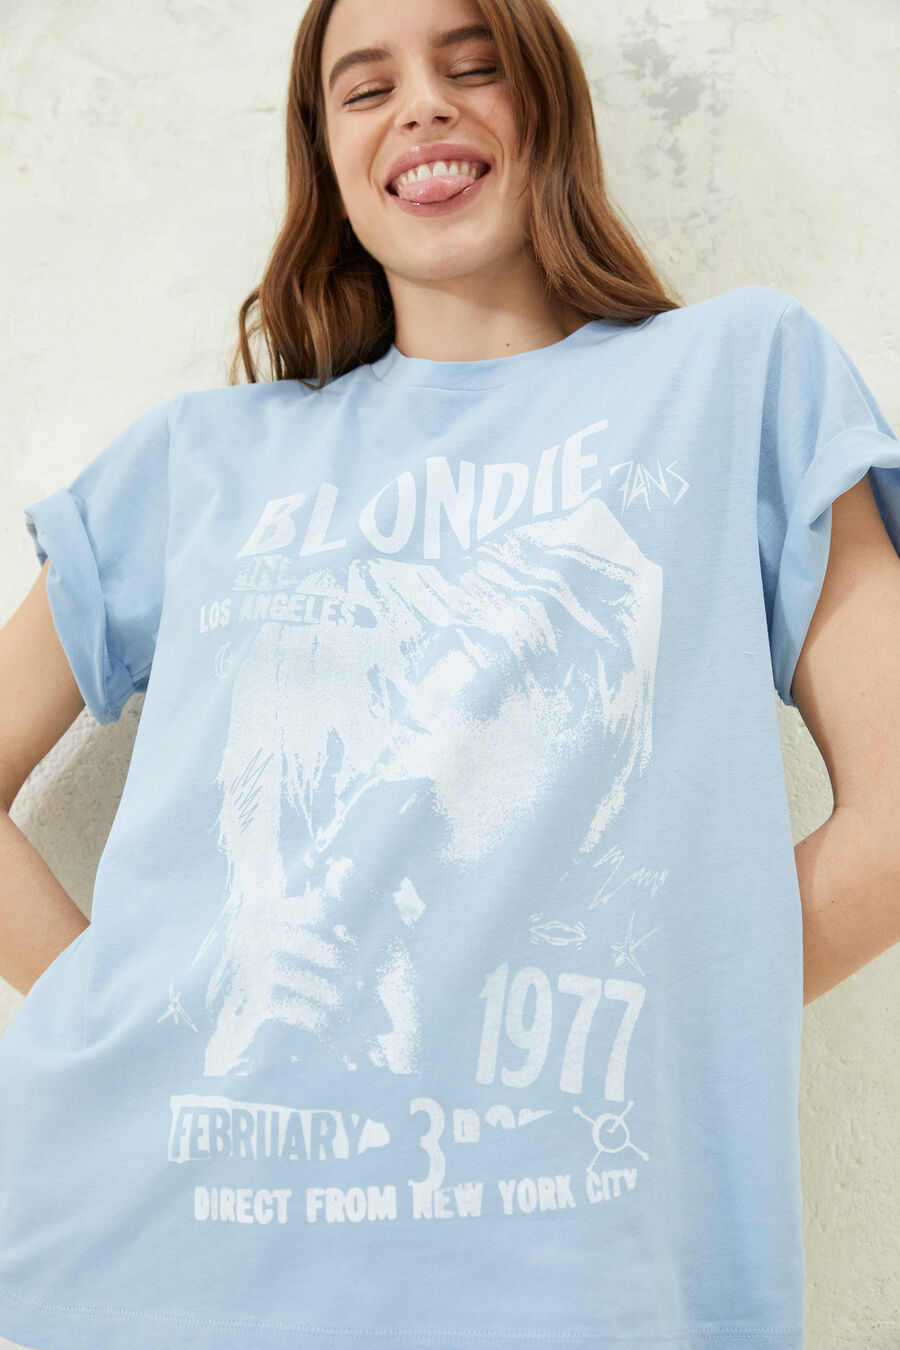 T-shirt blondie High Spirits